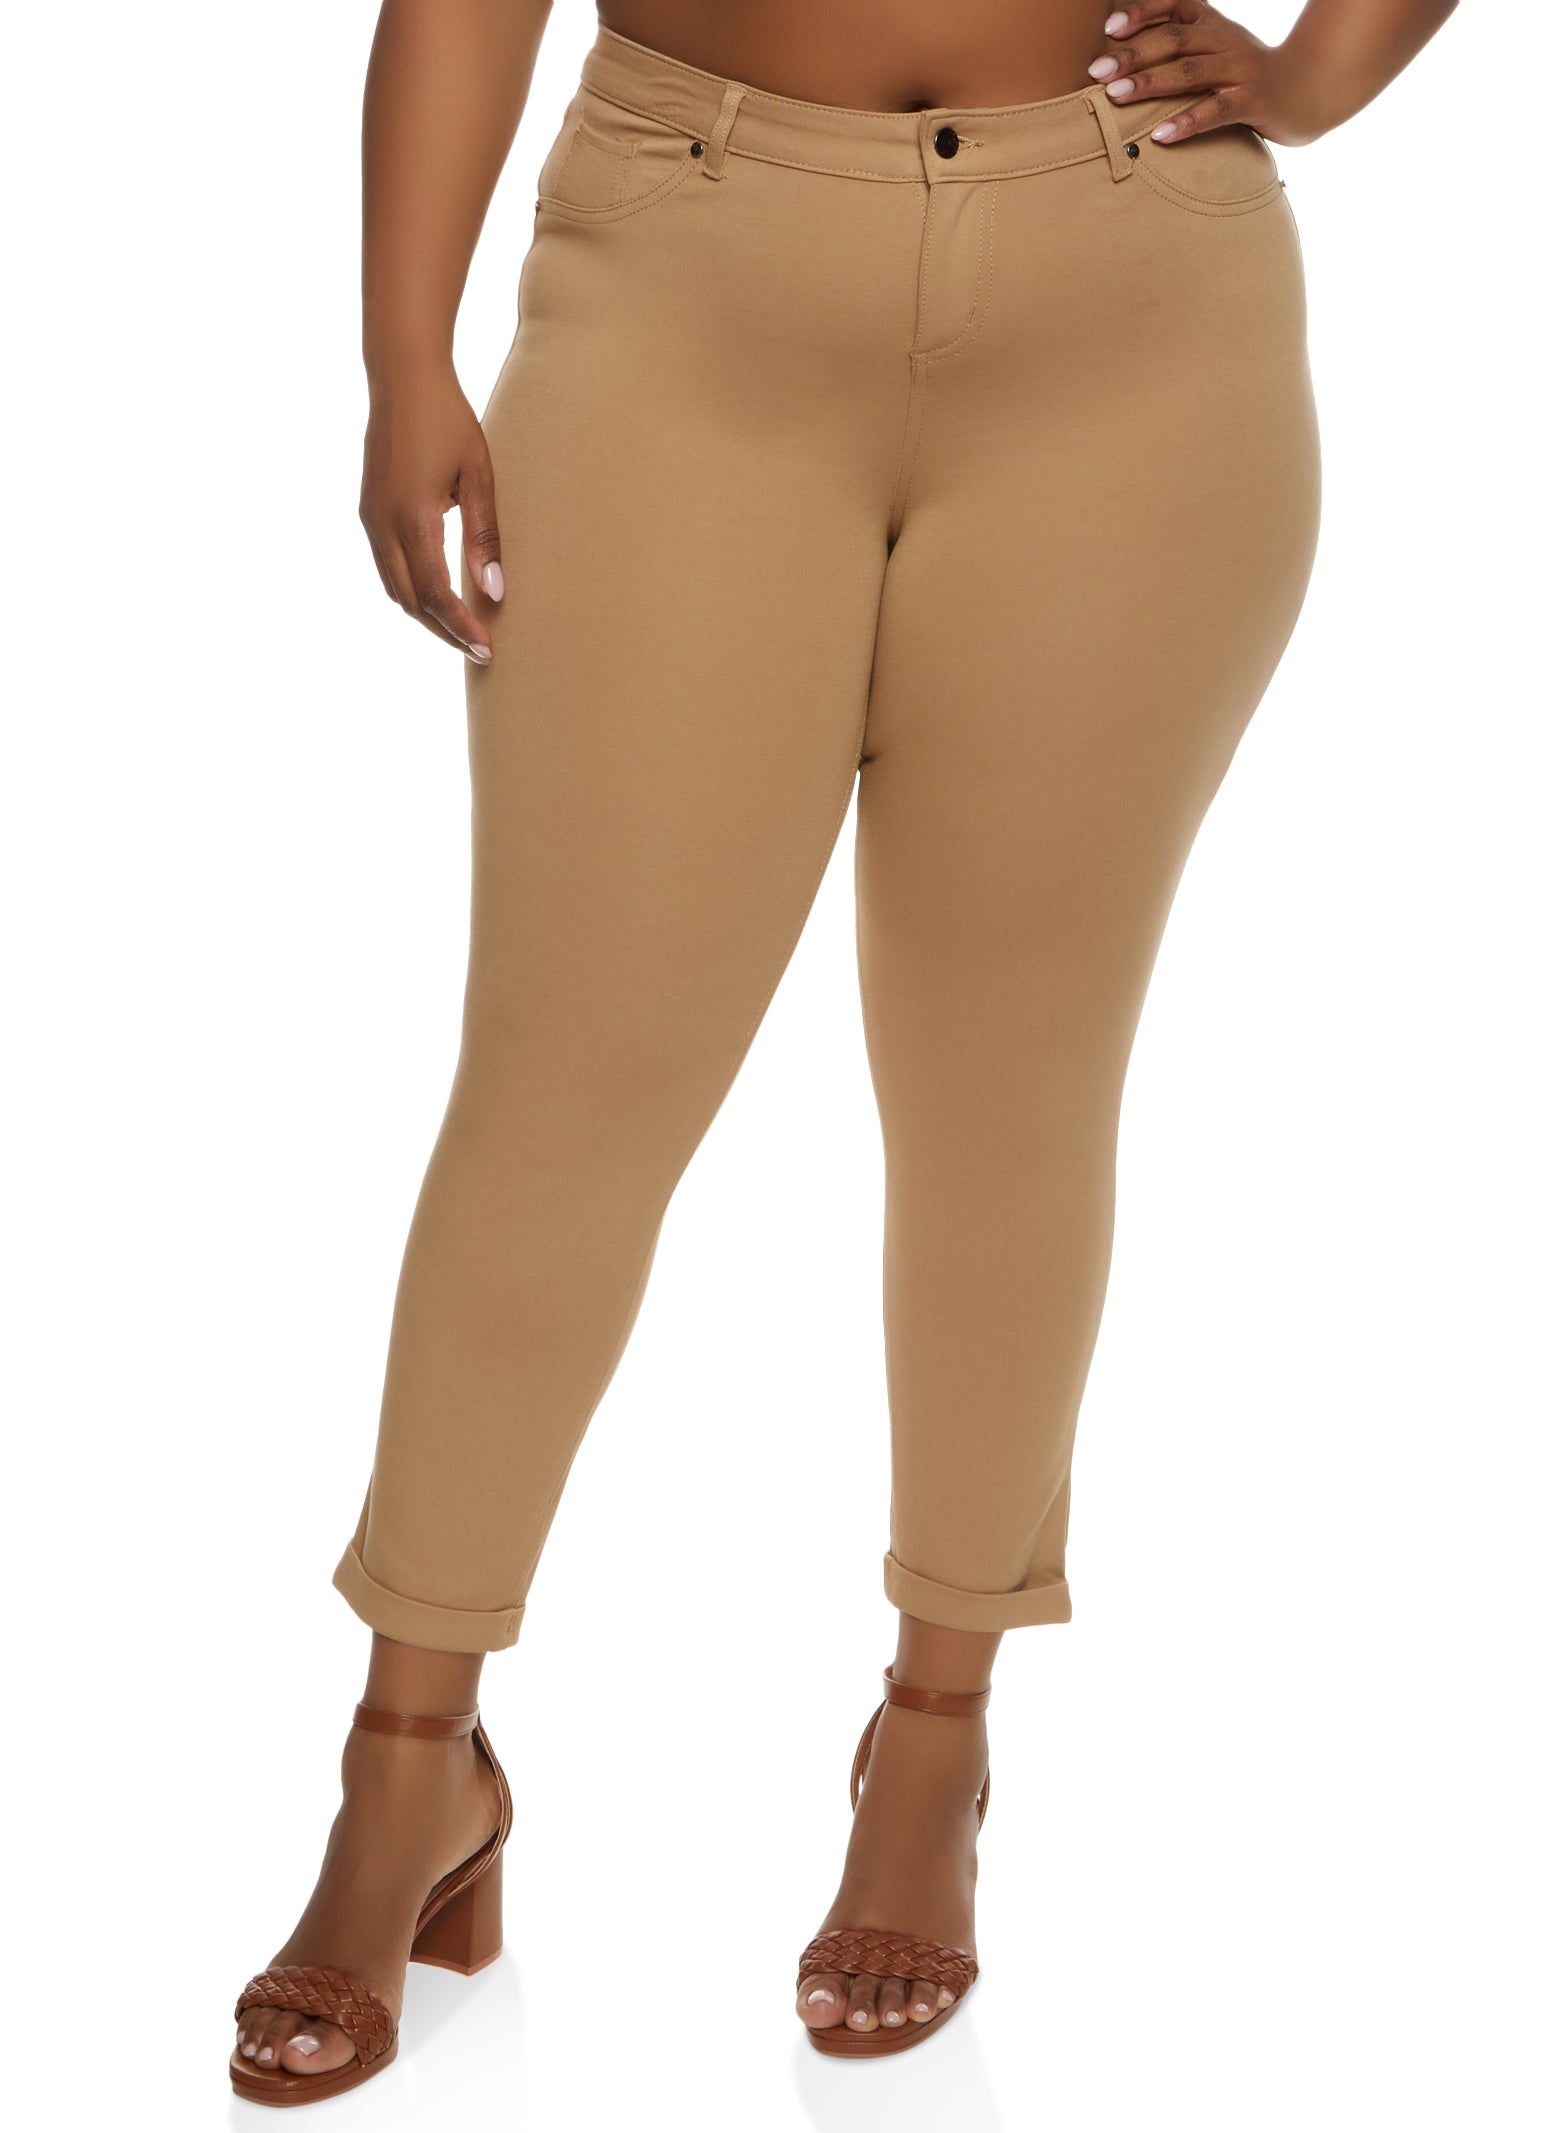 Capri Leggings - Plus Size - 1 Inch Waistband - Khaki